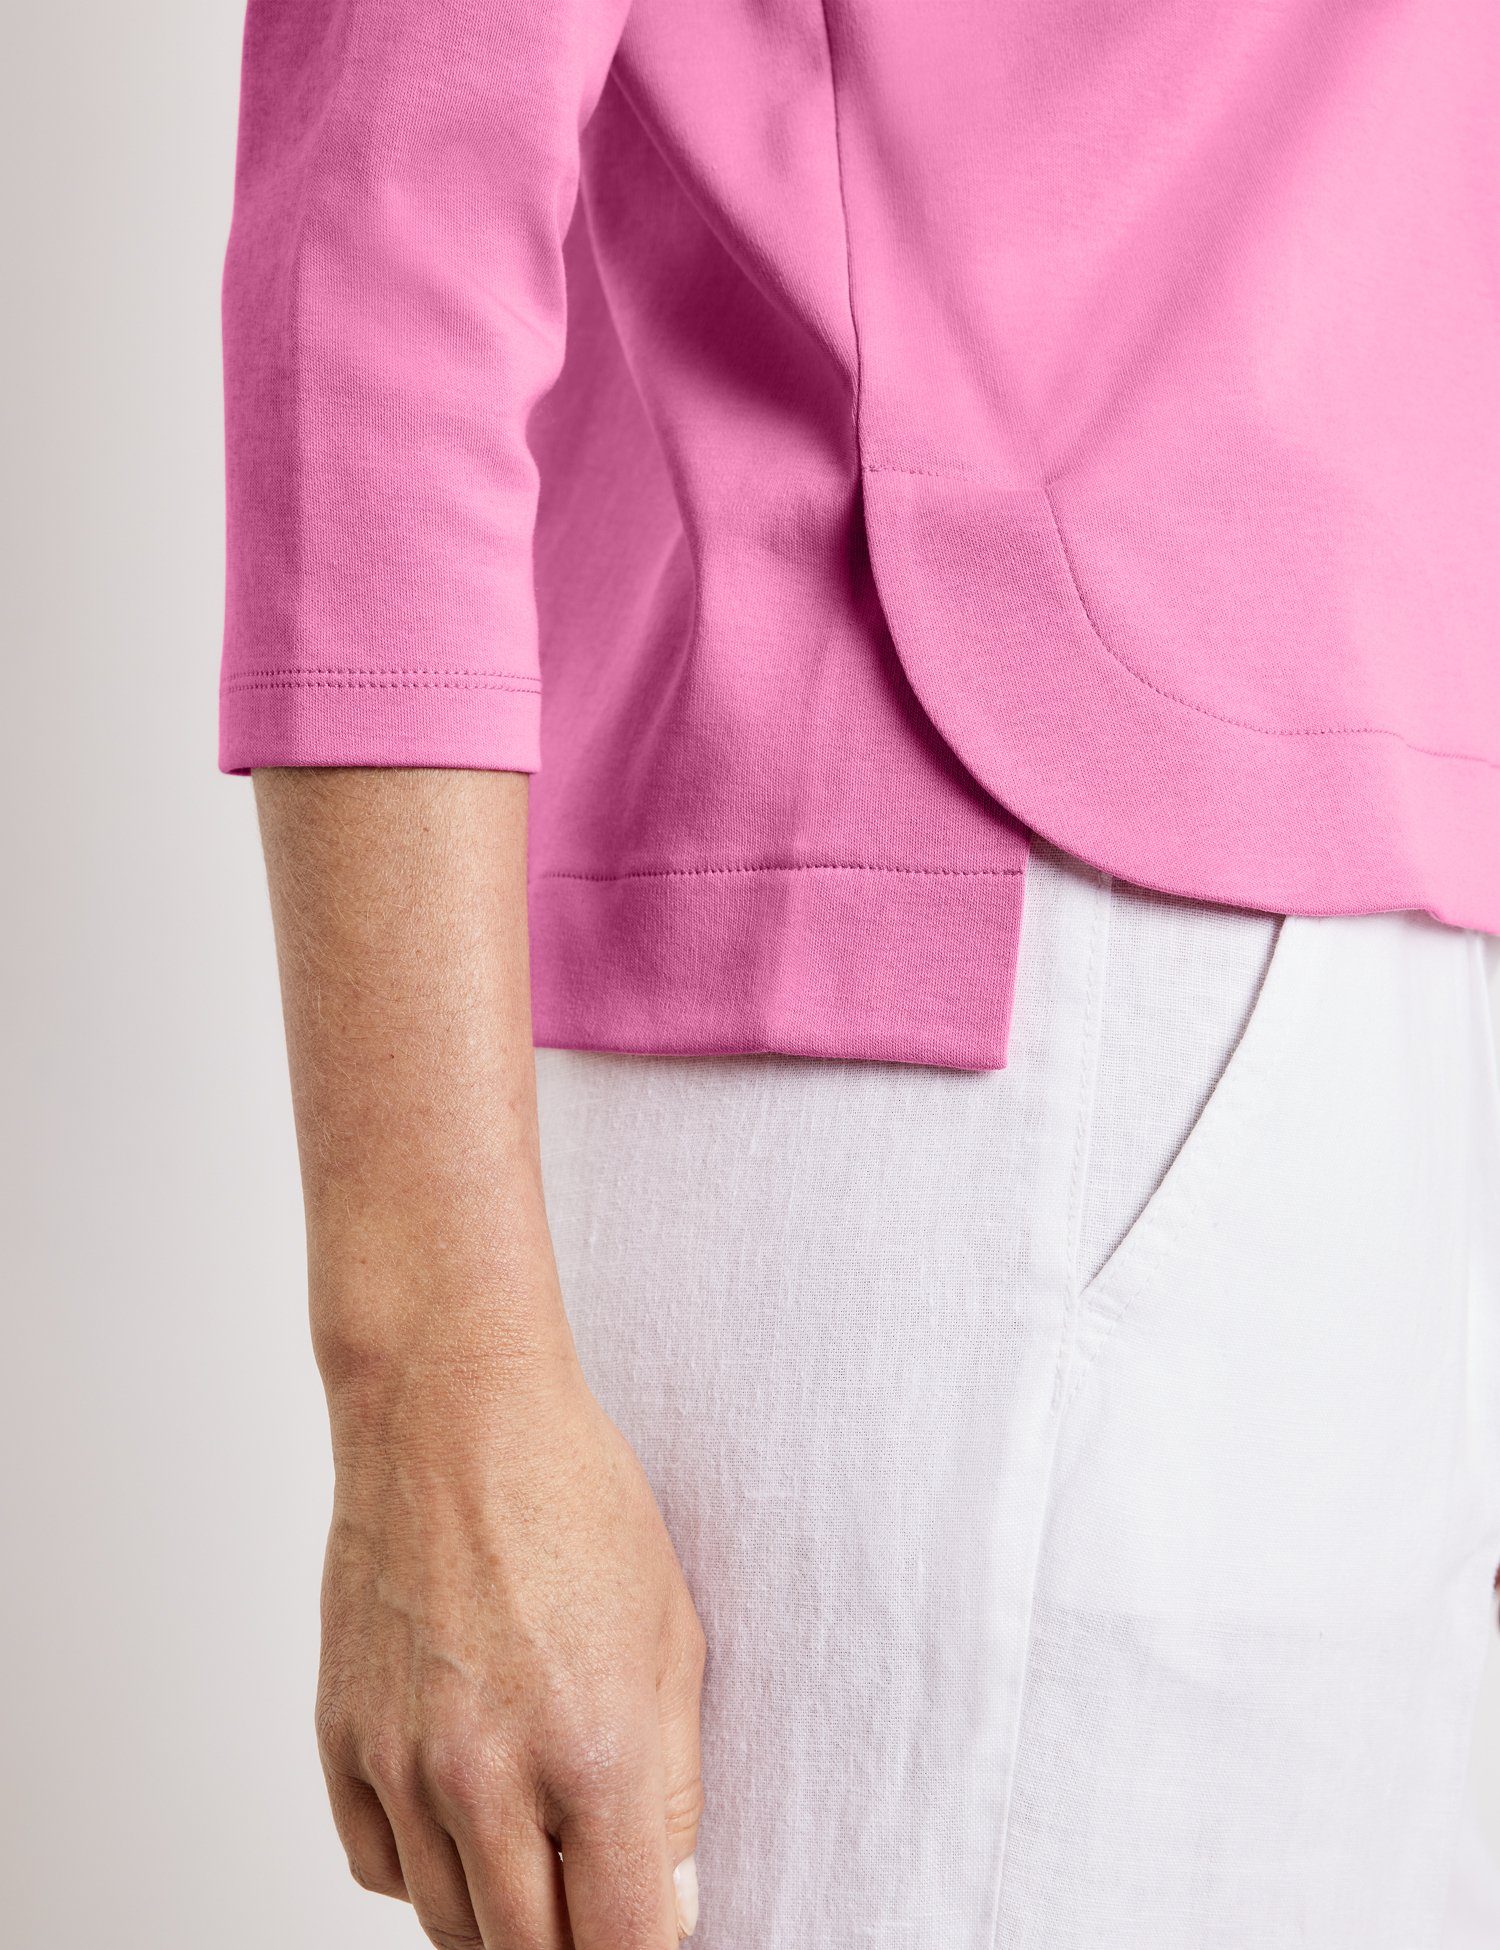 Pink Baumwolle GERRY 3/4-Arm-Shirt aus 3/4-Arm-Shirt reiner WEBER Soft